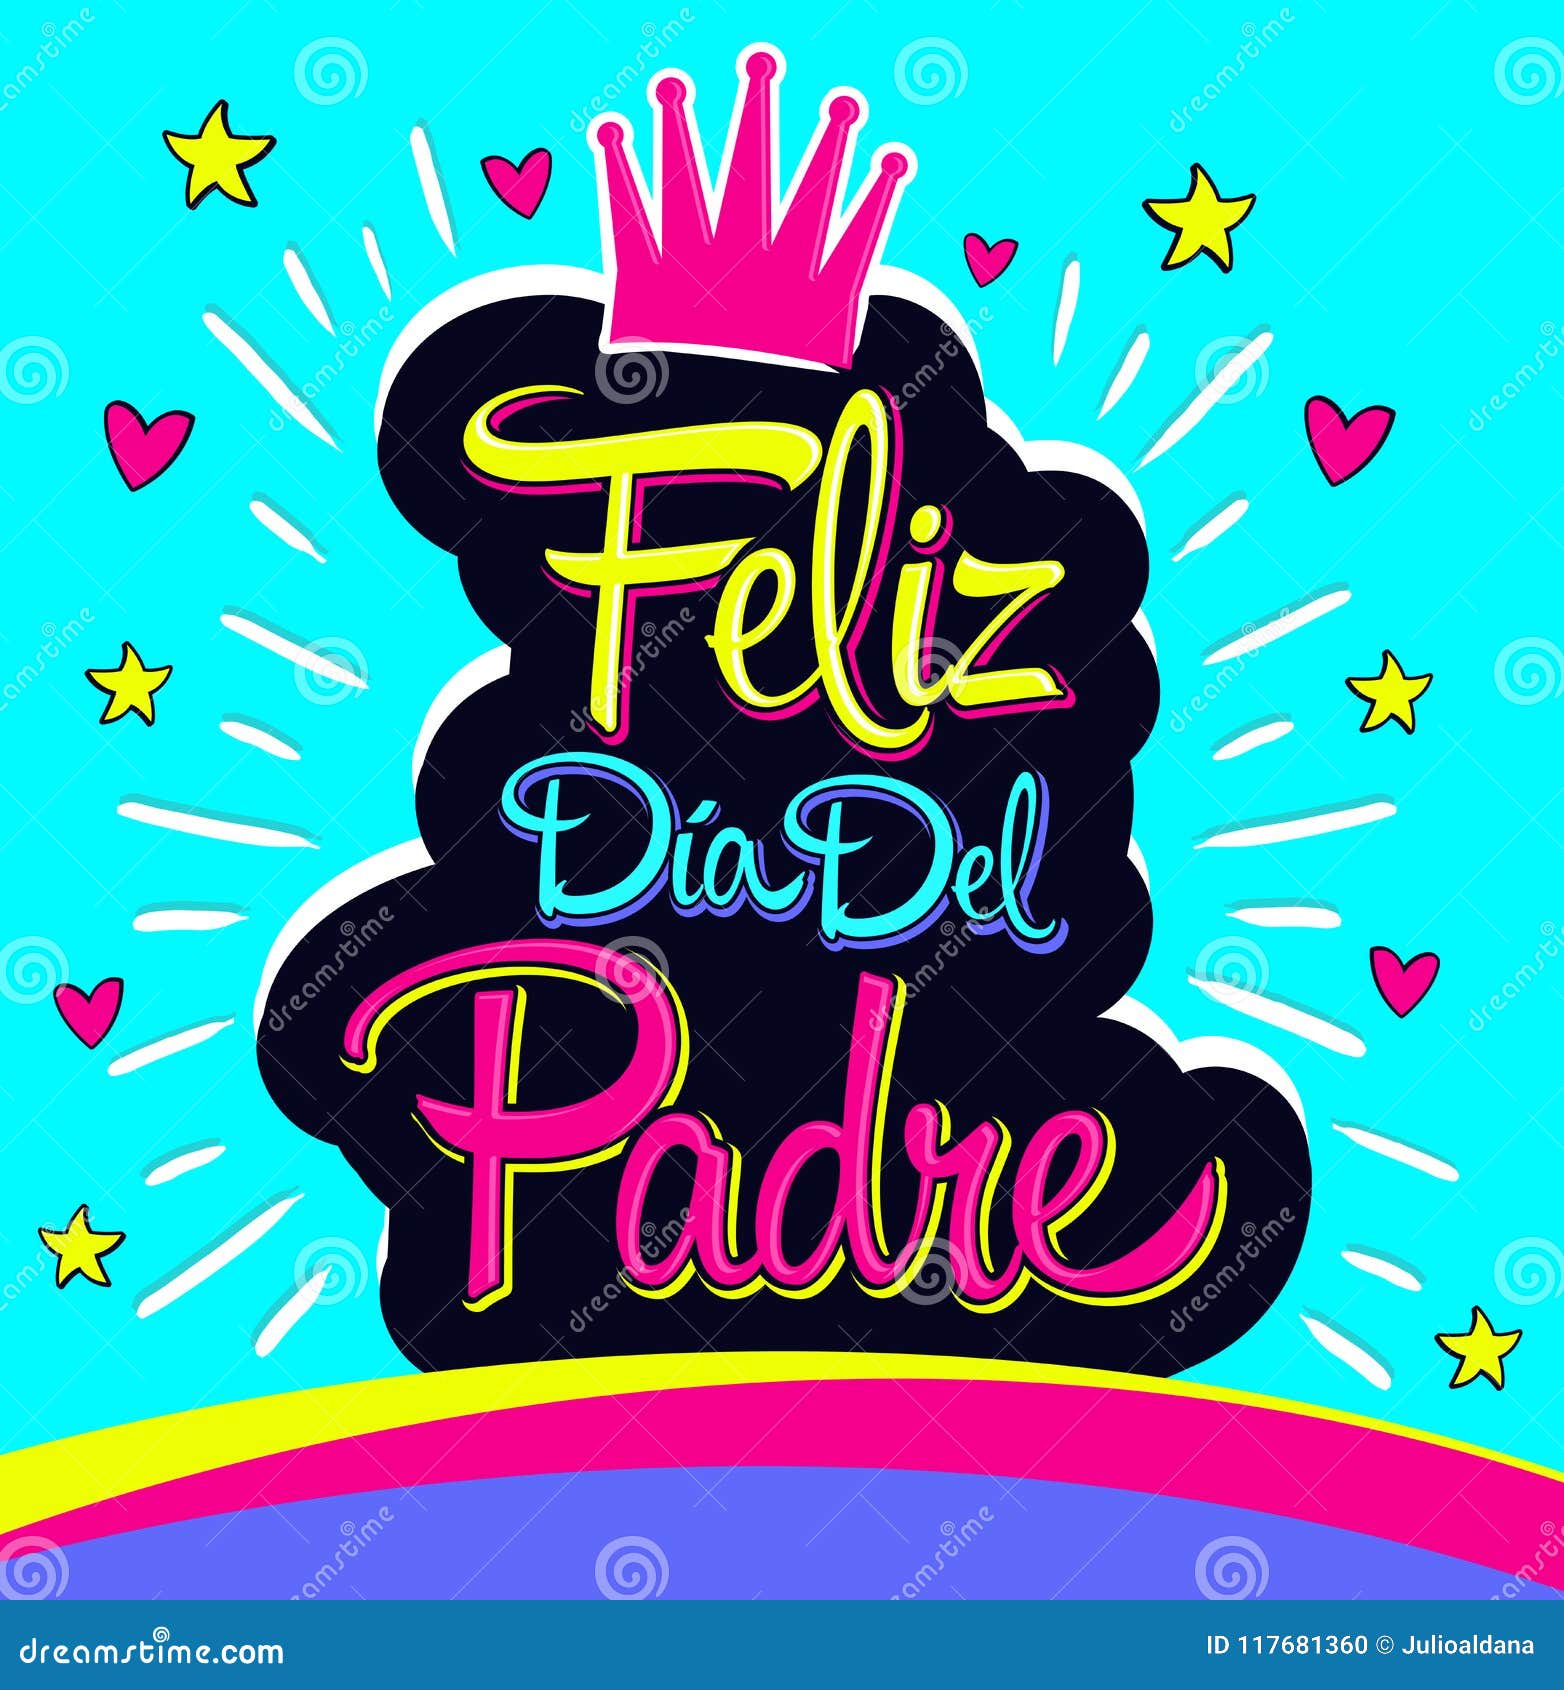 Feliz Dia Del Padre, Happy Fathers Day Spanish Text Stock Vector -  Illustration of hearts, design: 117681360